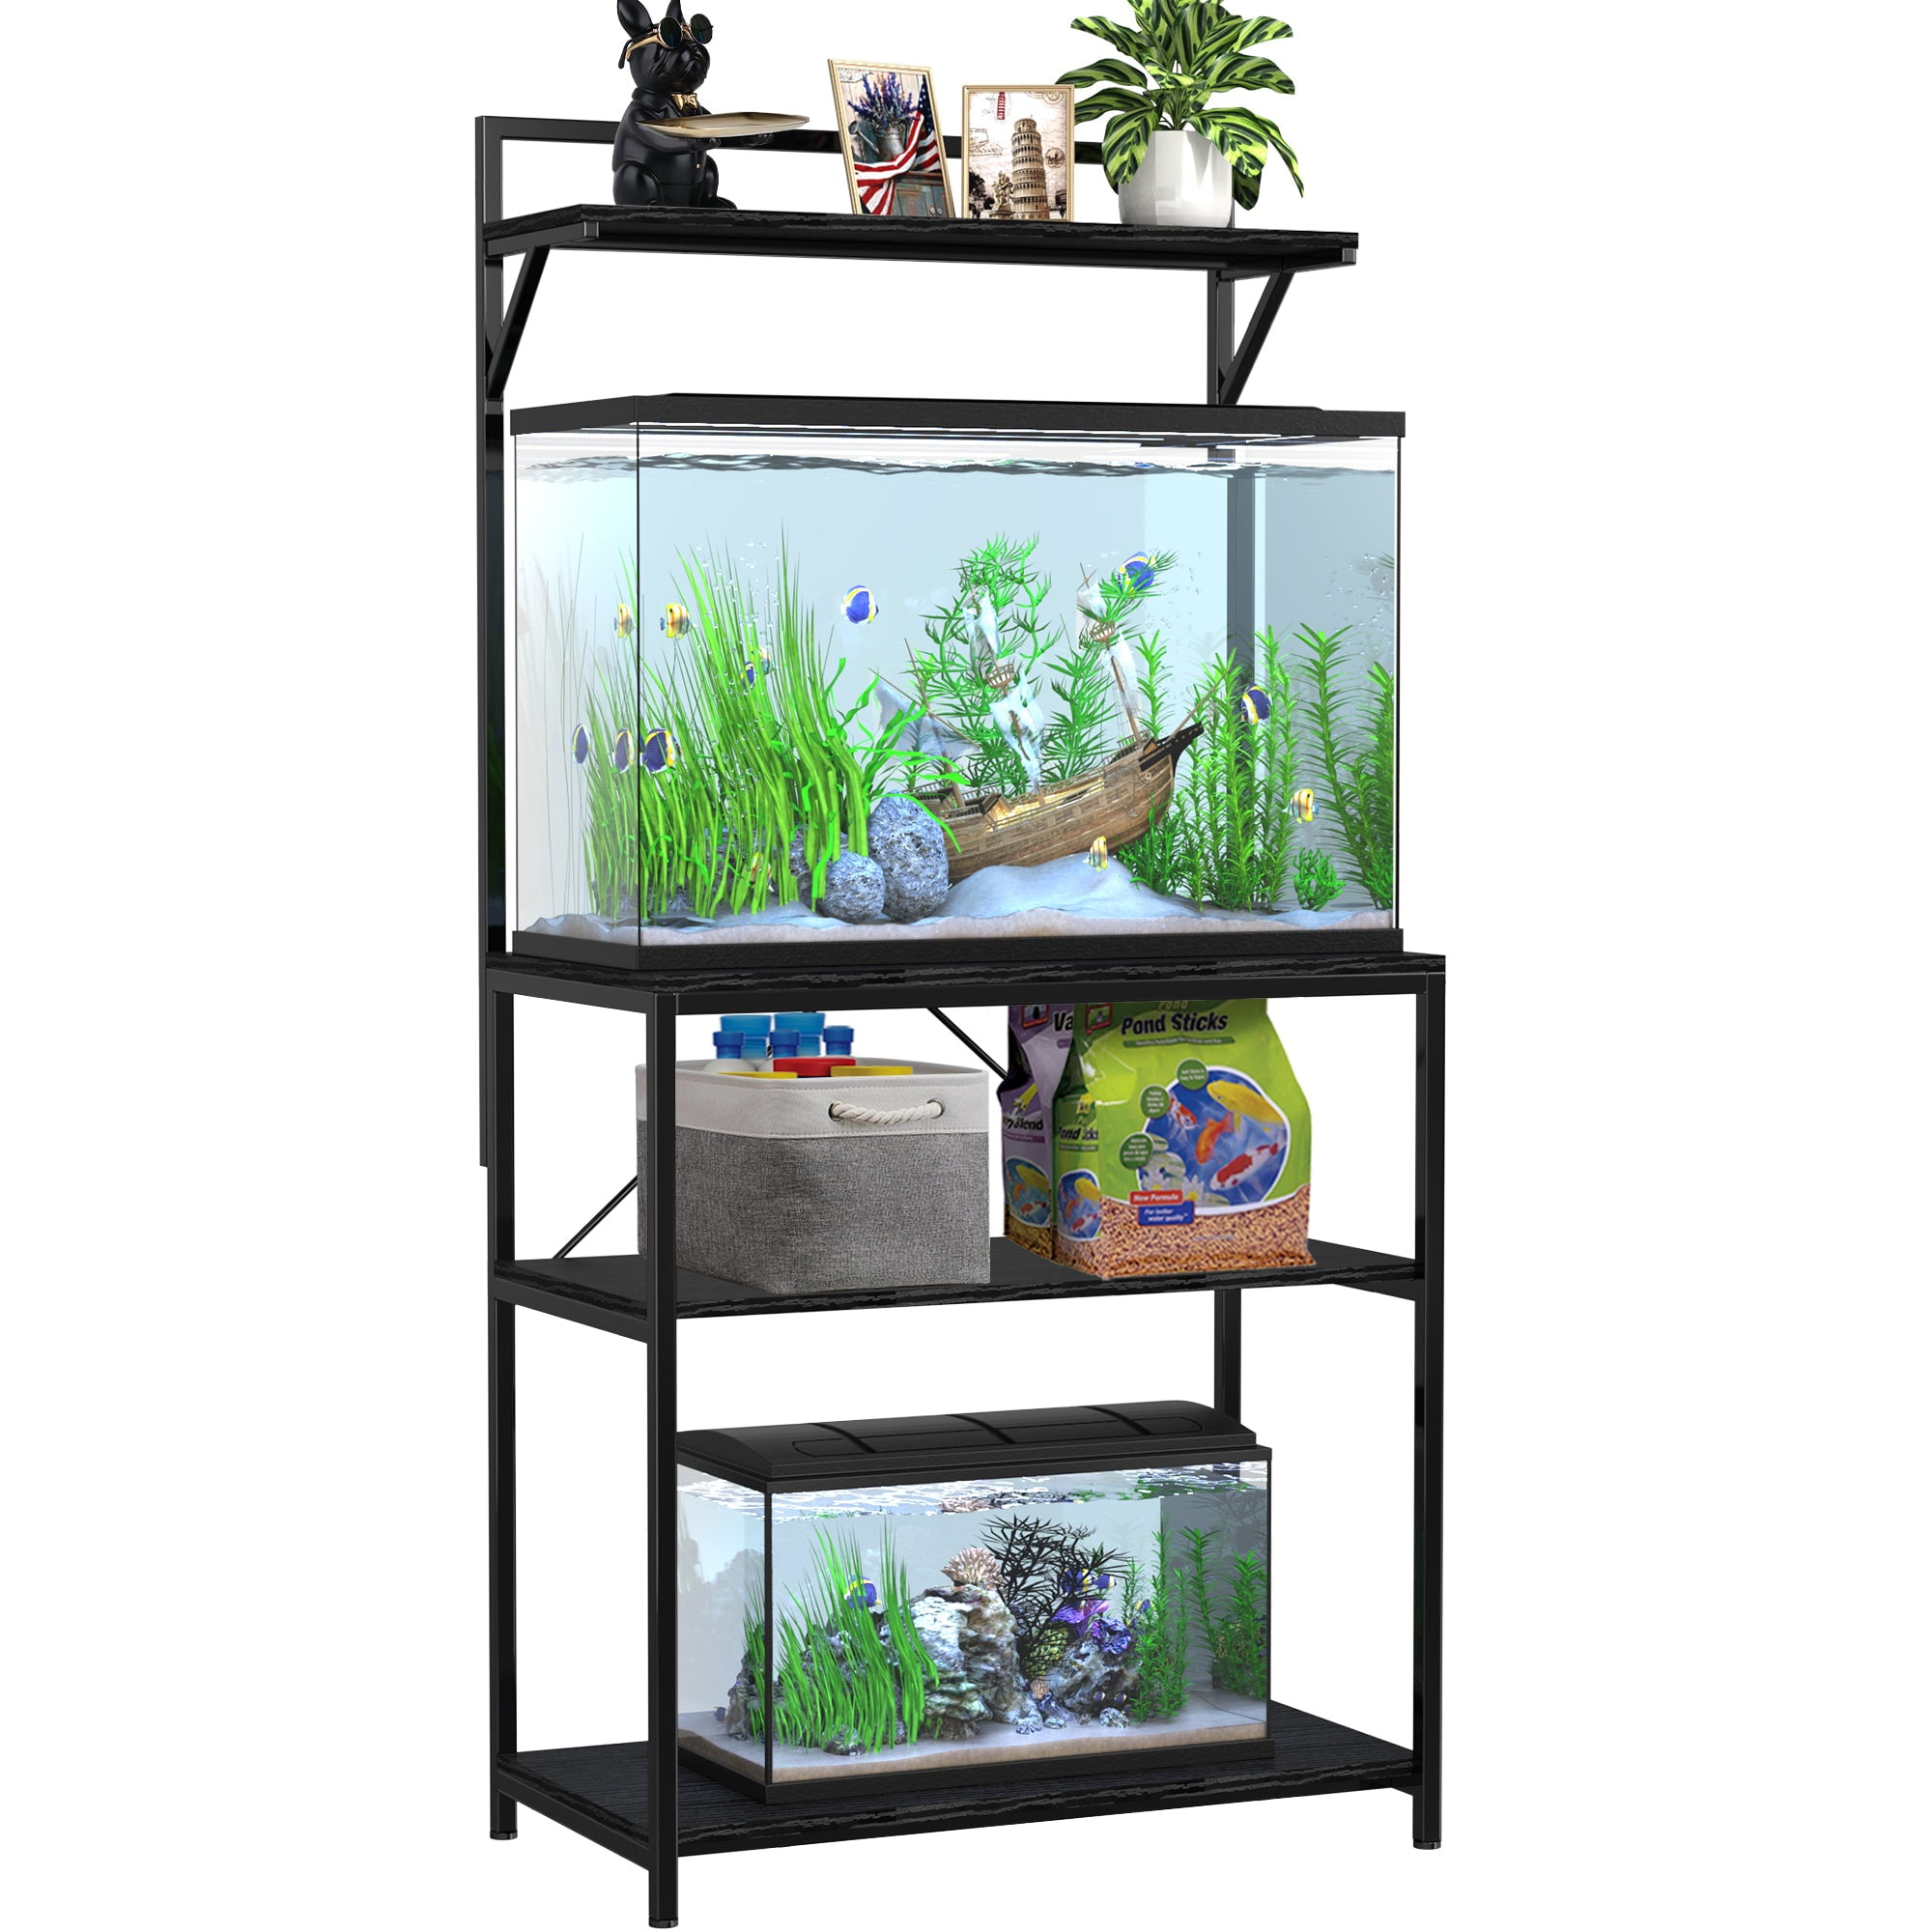 GDLF 20-29 Gallon Fish Tank Stand with Plant Shelf, Aquarium Stand